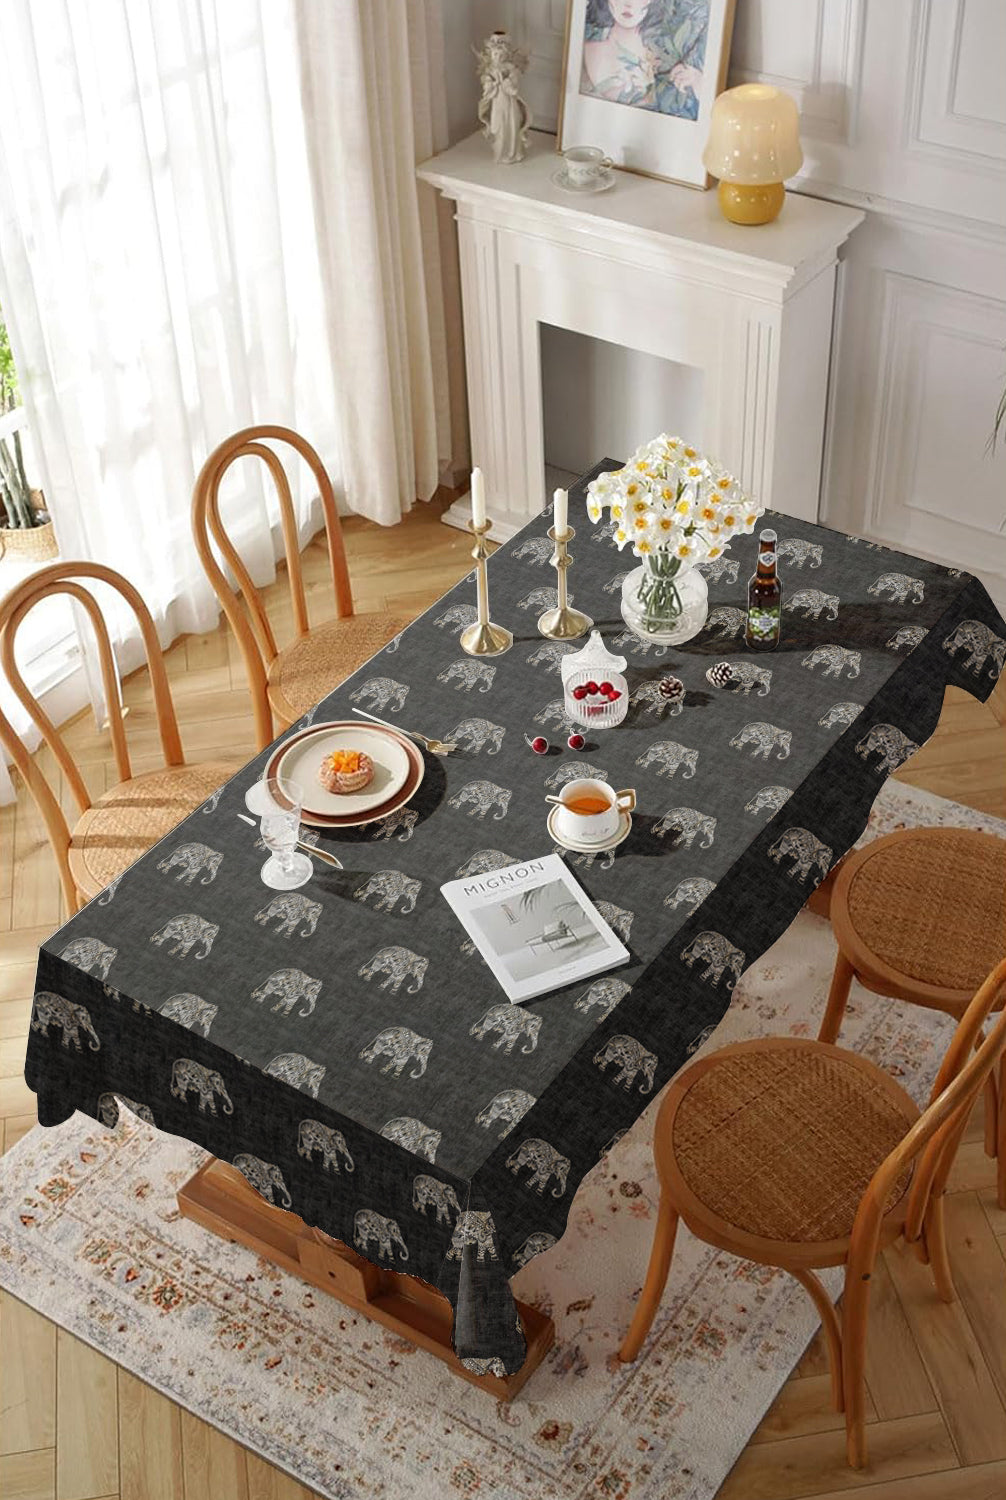 Jodhpur Elephant 6 Seater Table Cloth Black